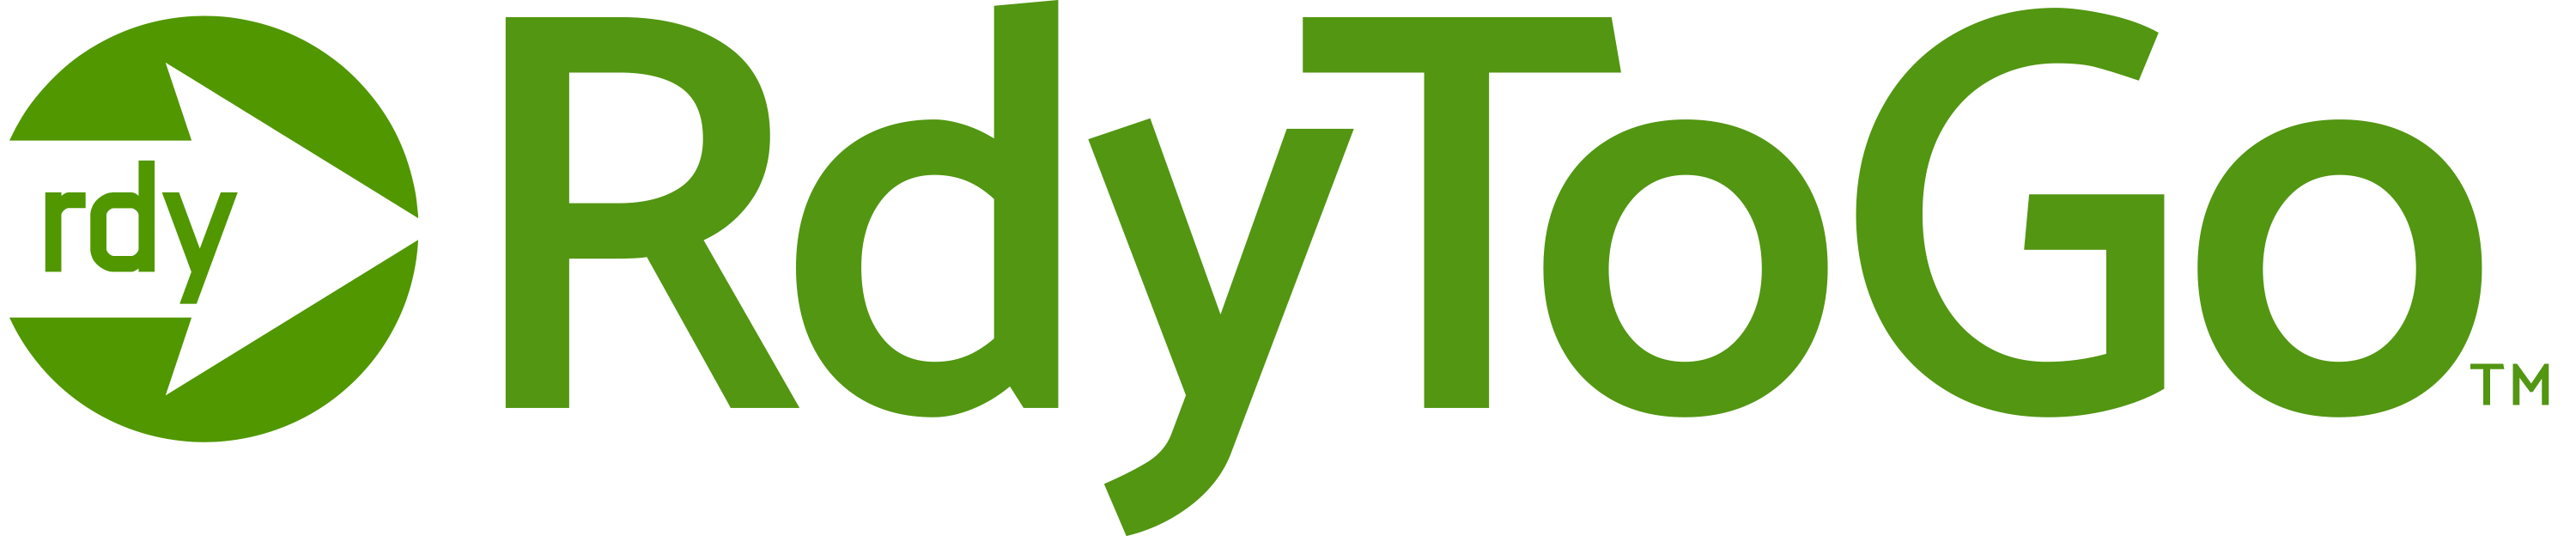 RdyToGo - Web Design, Branding, and Marketing